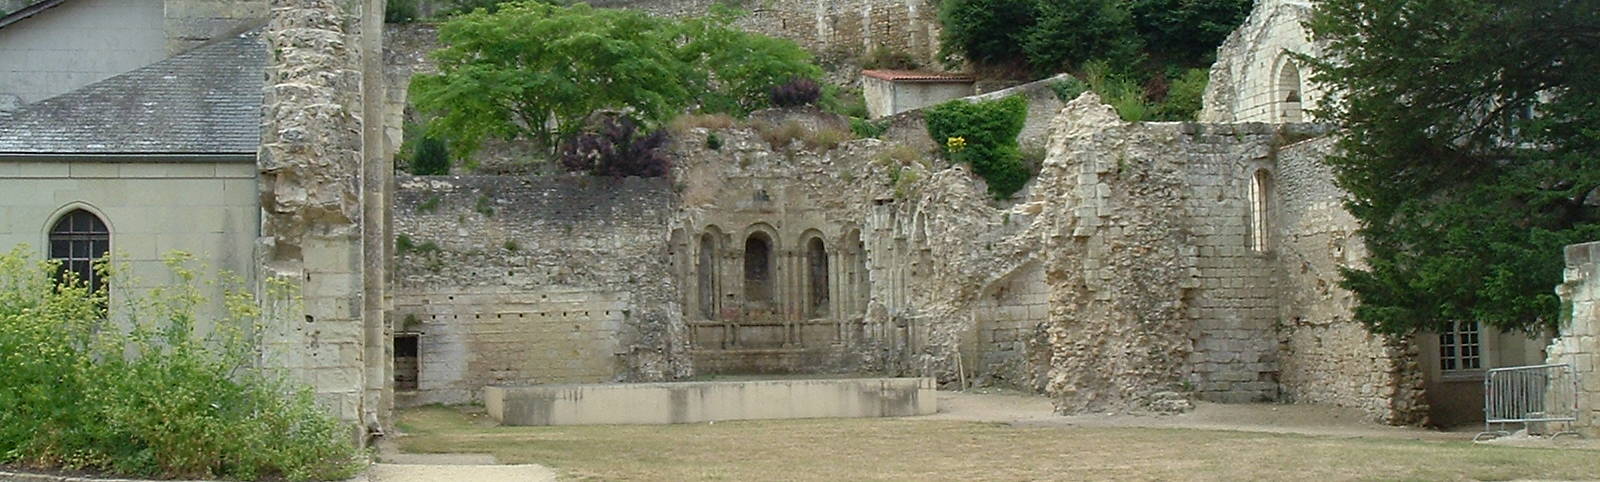 Ruins of a church in Montreiul-Bellay, France.